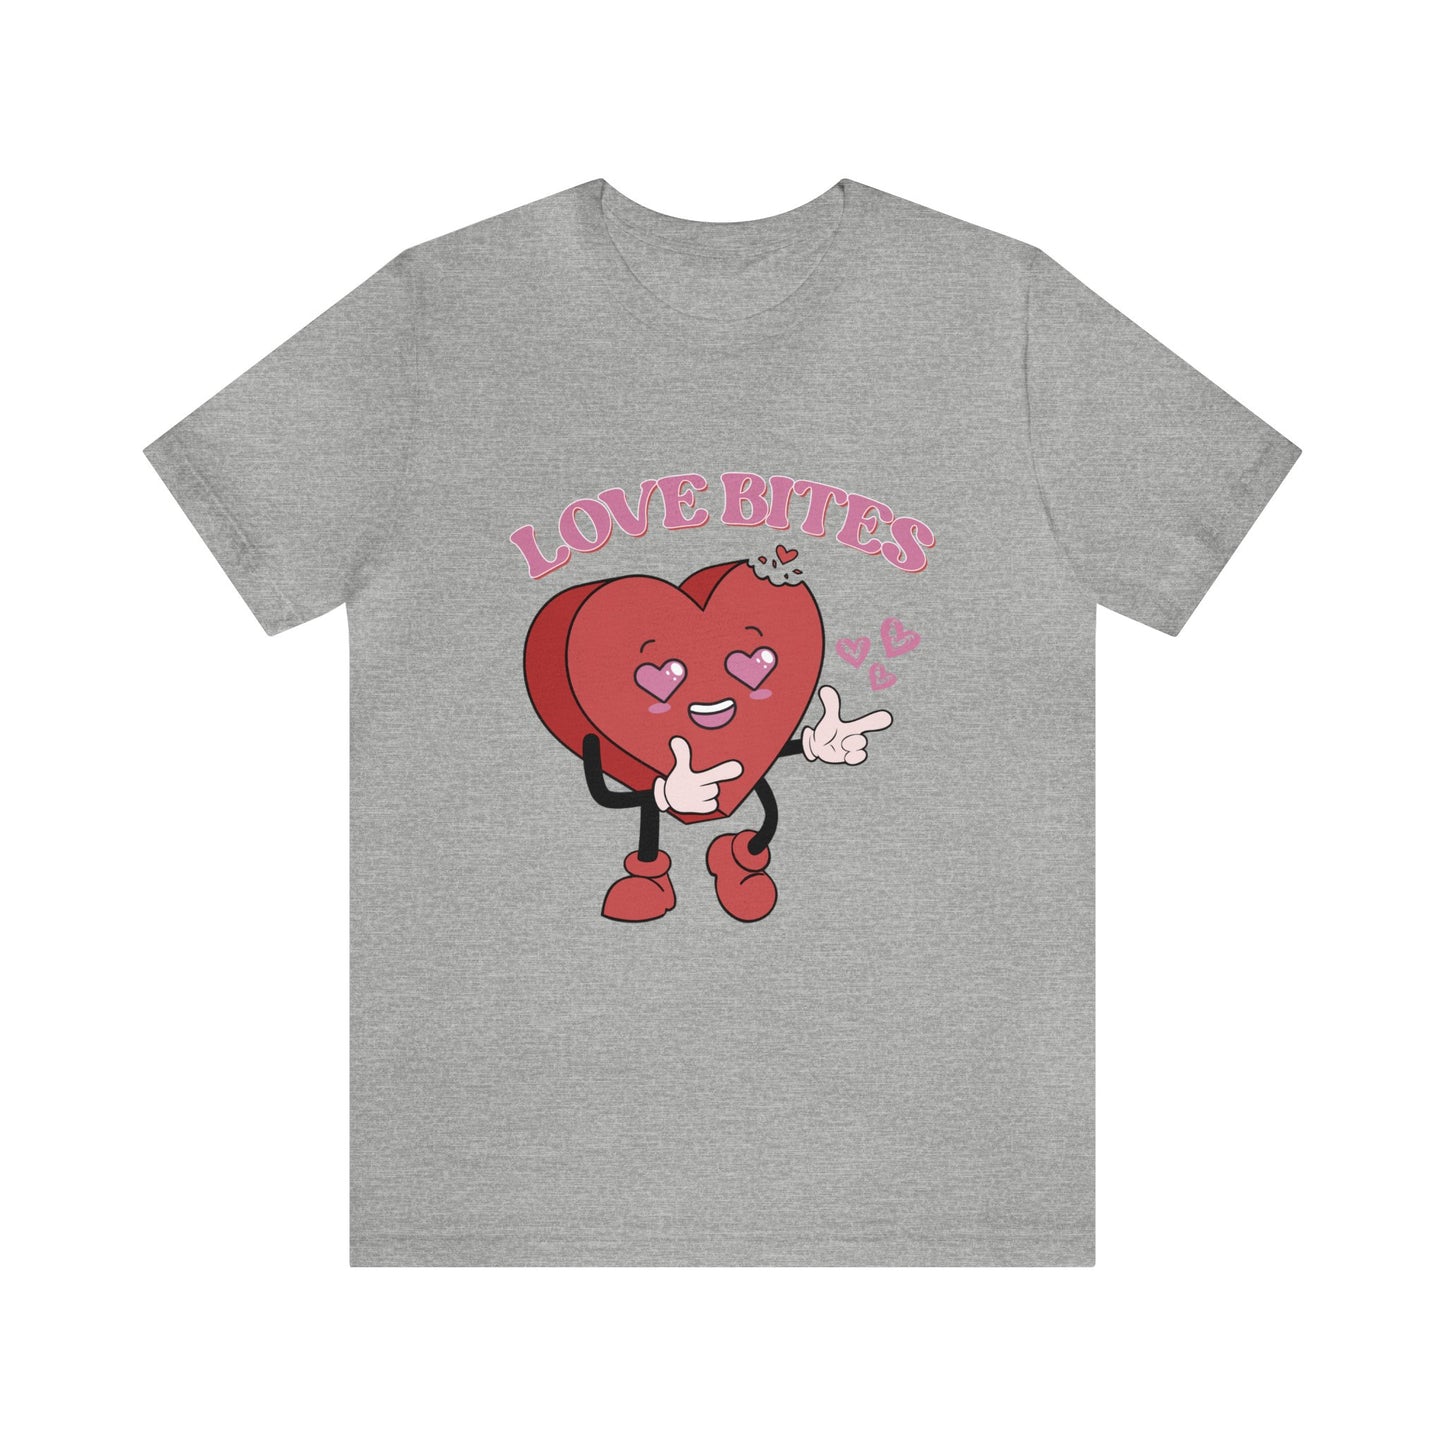 Love Bites Women's Tshirt